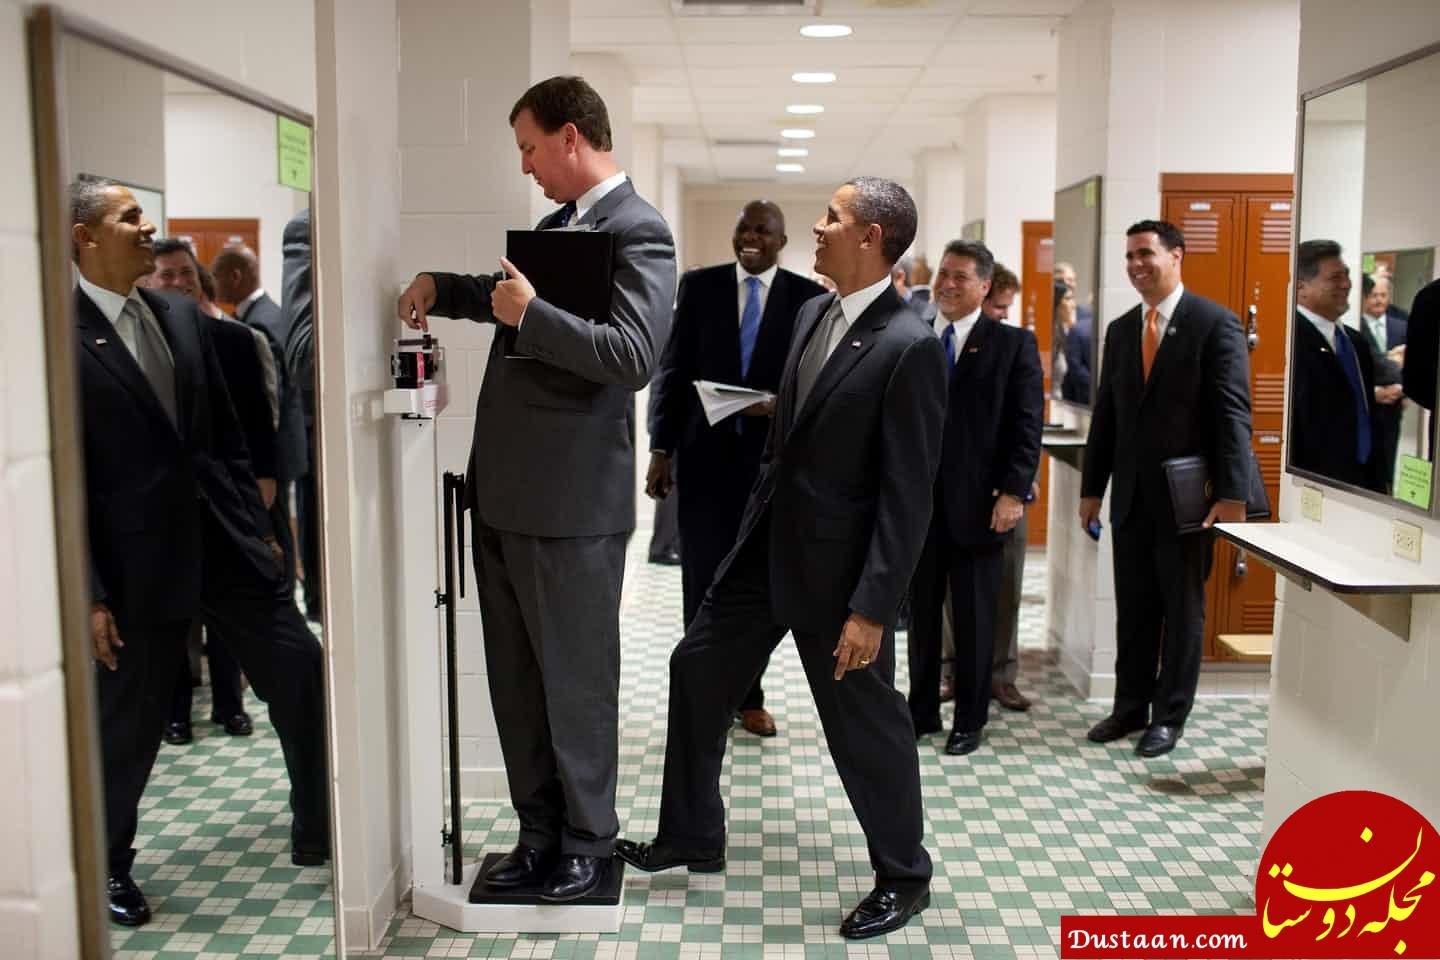 www.dustaan.com-تصاویری خاص و متفاوت از اوباما در دوران ریاست جمهوری اش